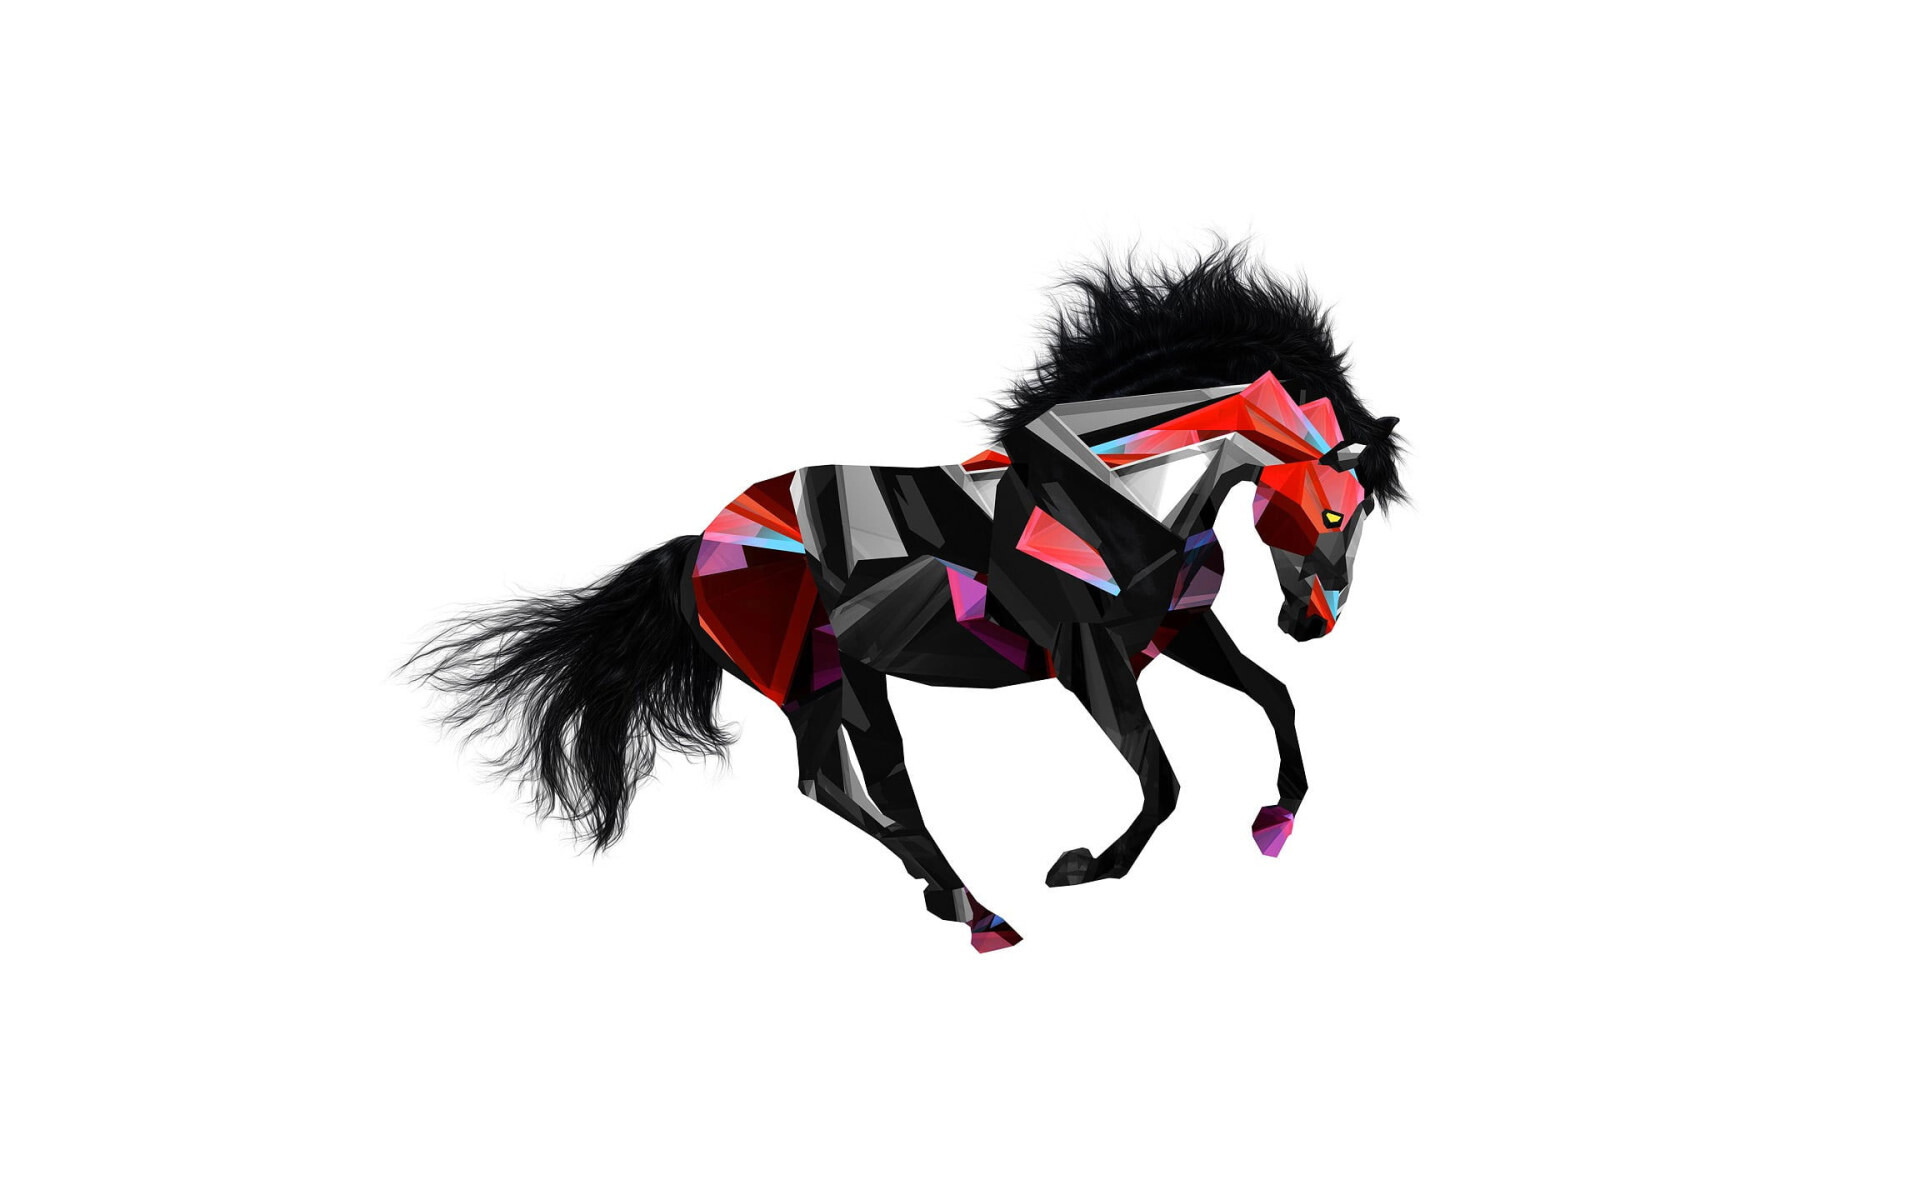 Black and red horse wallpaper, Illustrative animal art, Striking animal design, Bold animal representation, 1920x1200 HD Desktop